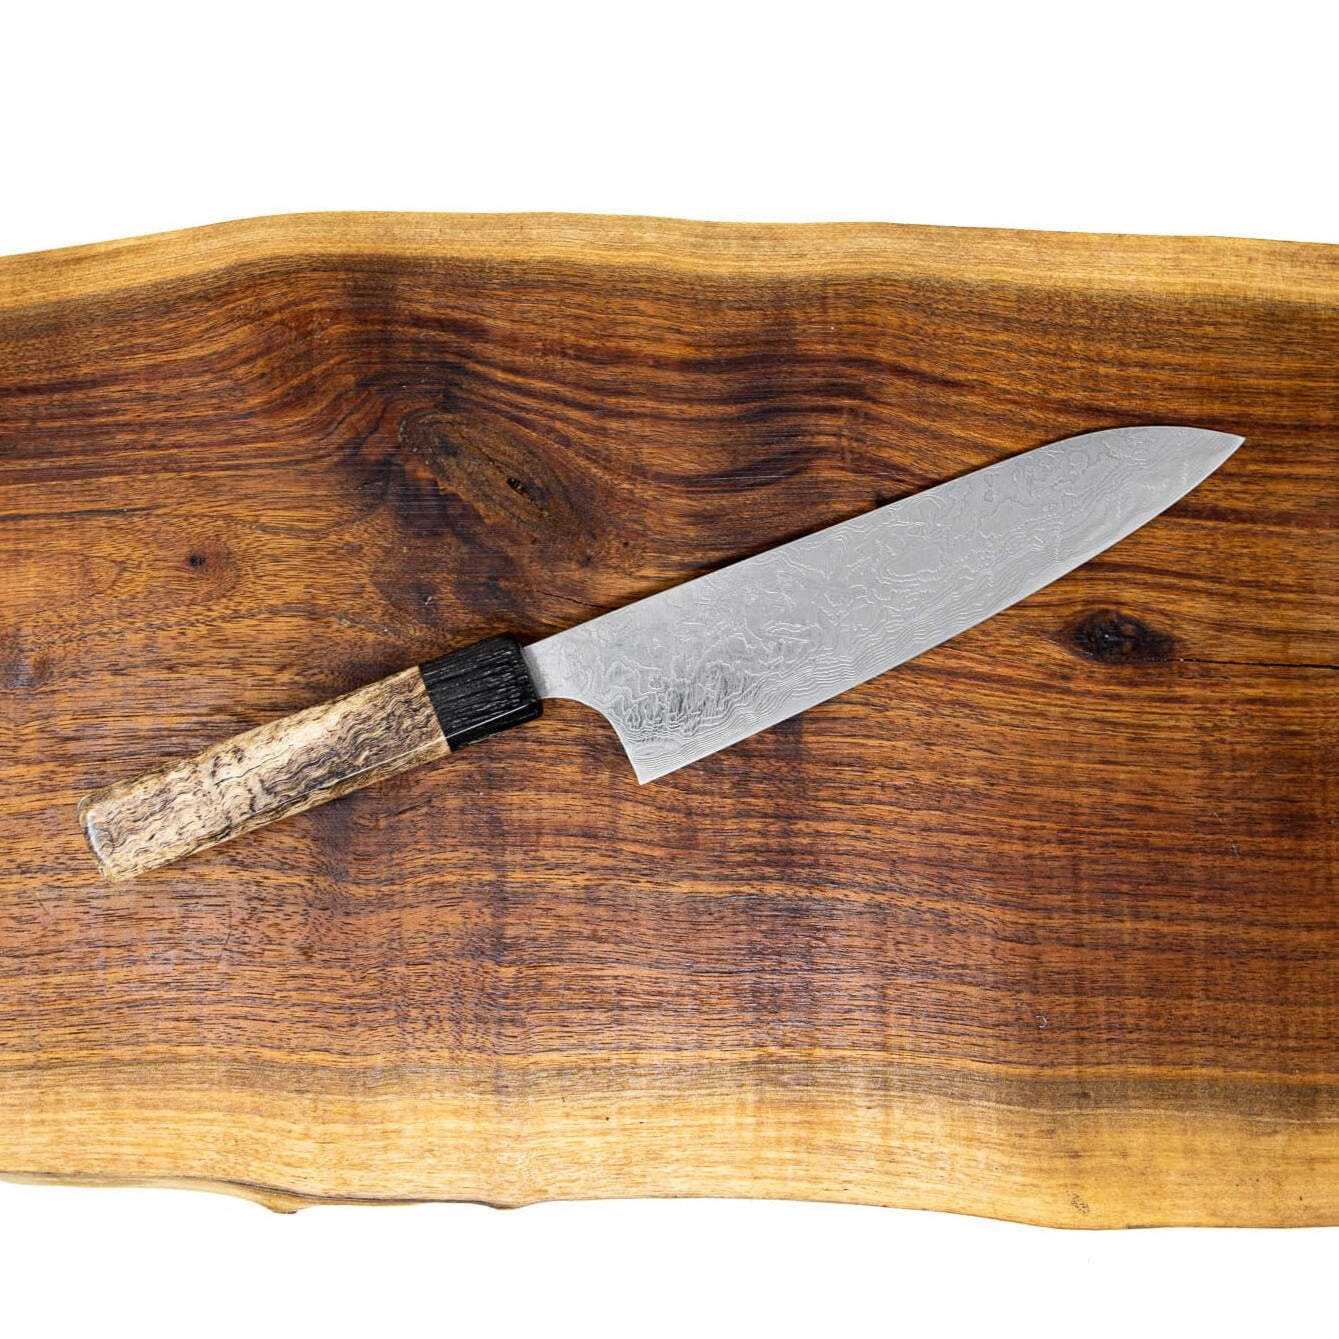 Japanese Chef Knife 7.5" Gyuto